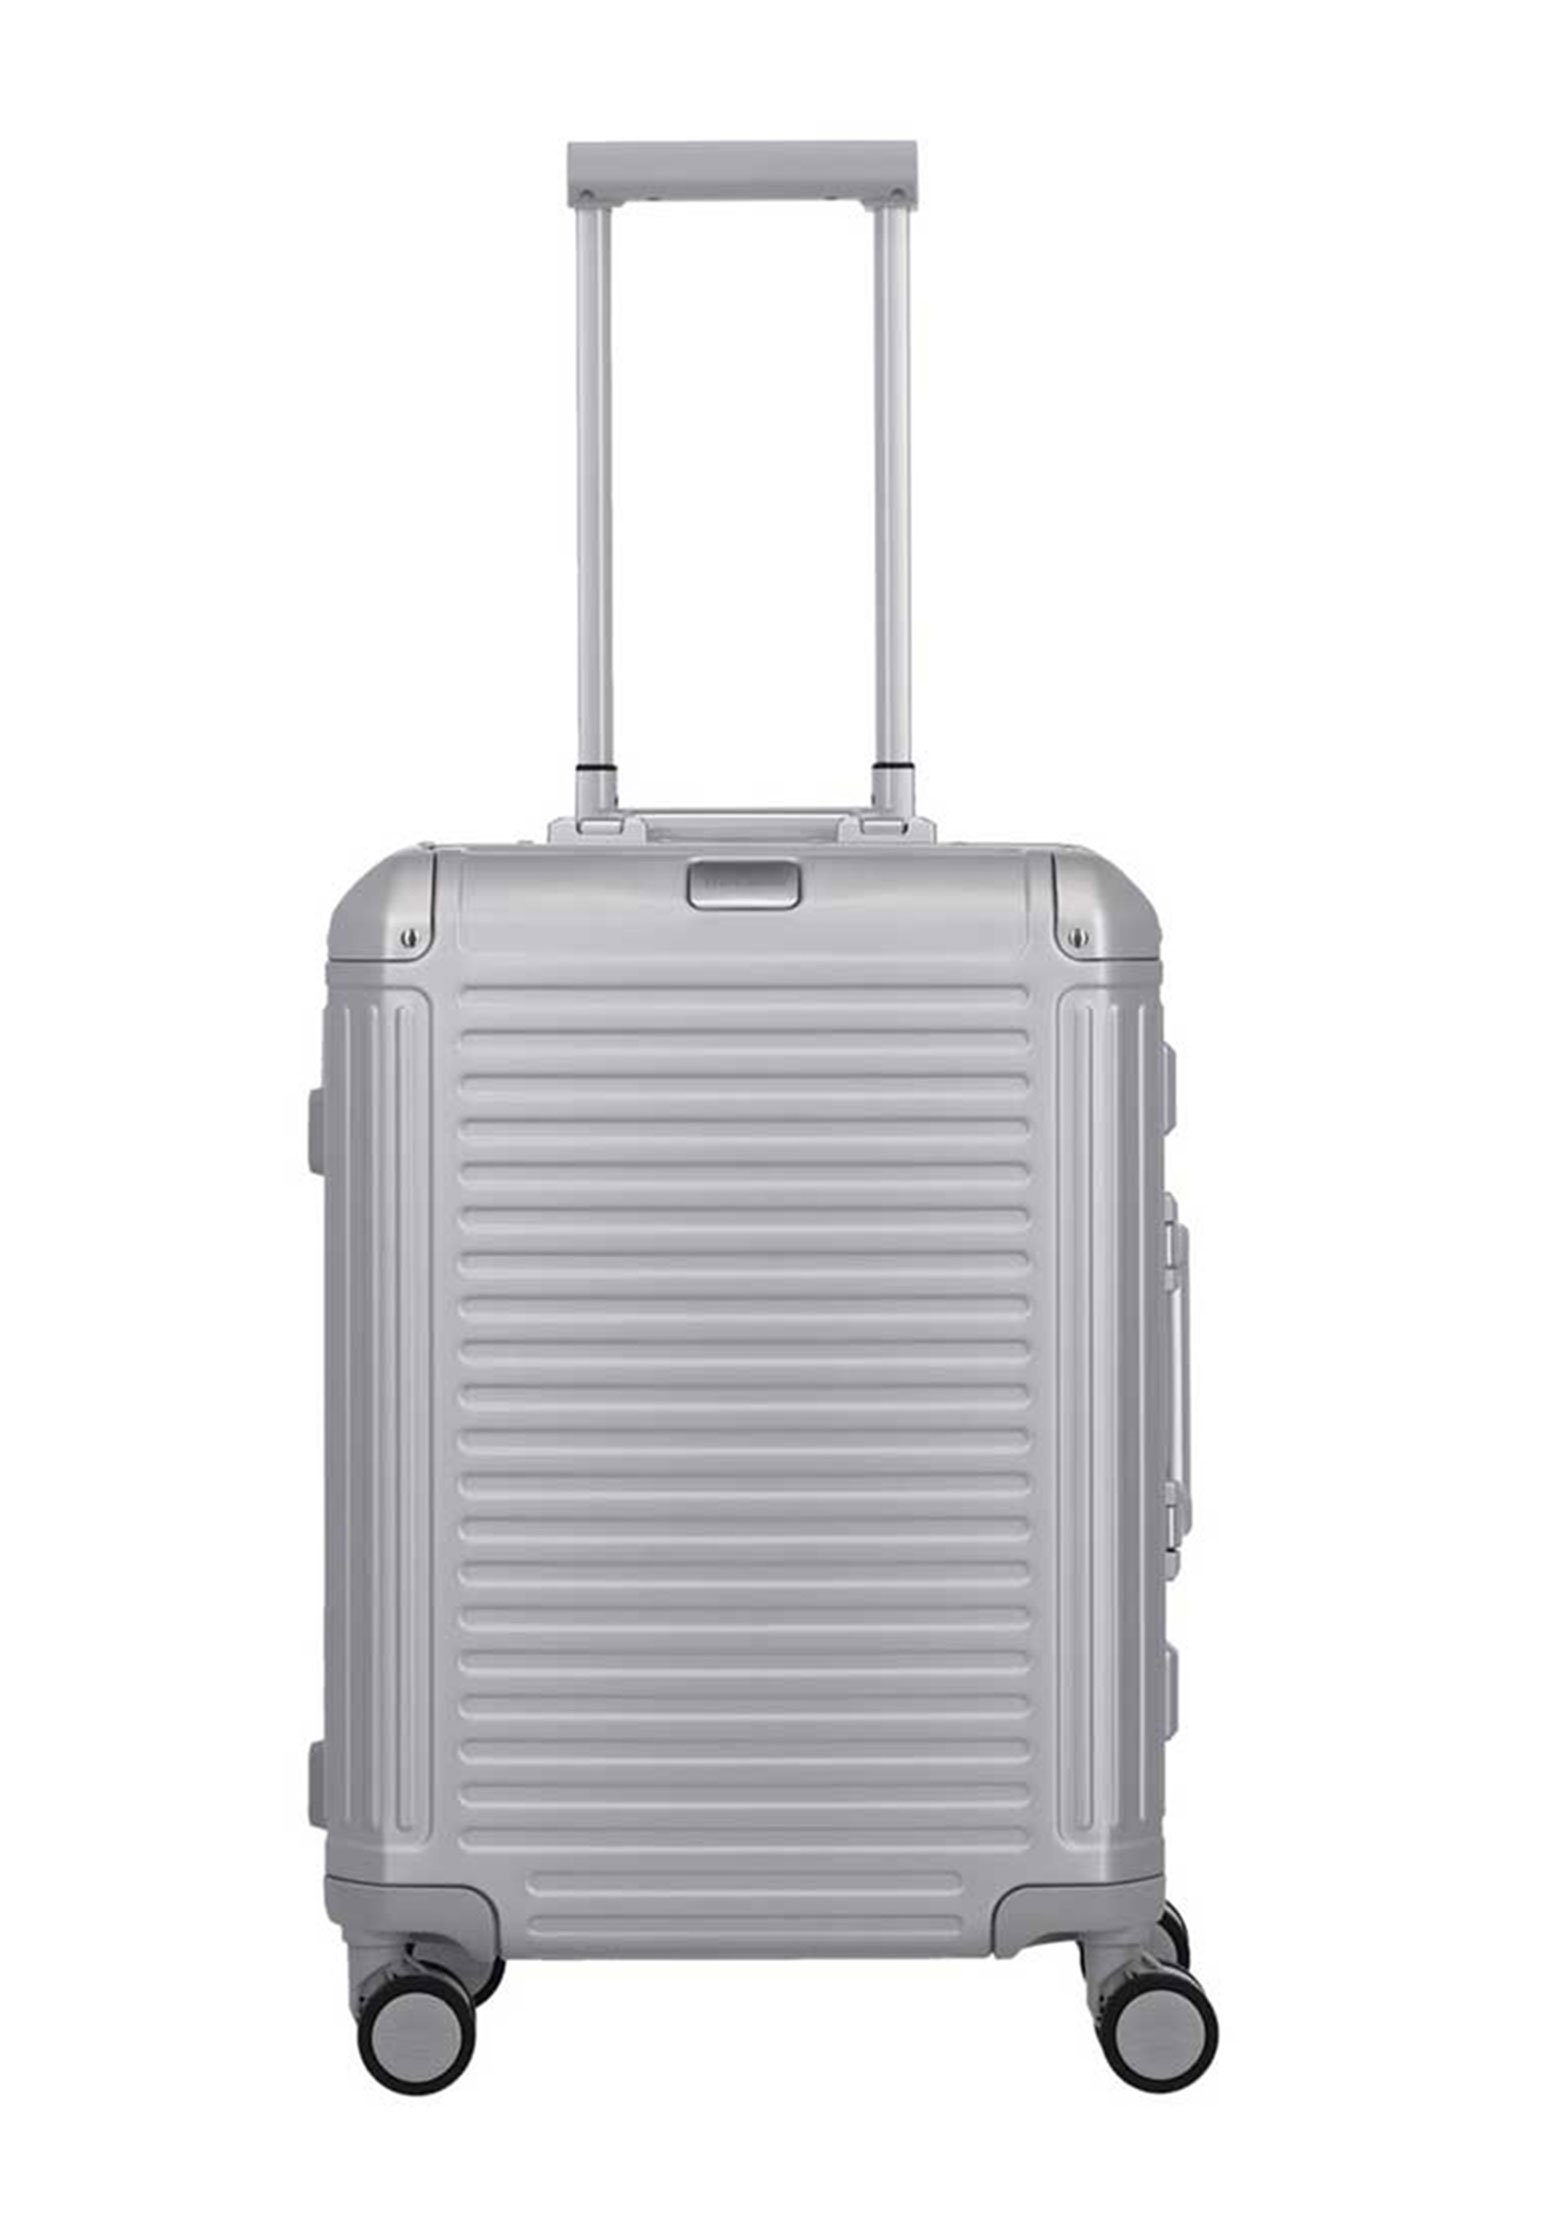 Bag TRAVELITE Color: silver (Code: 3403) in online store Allure